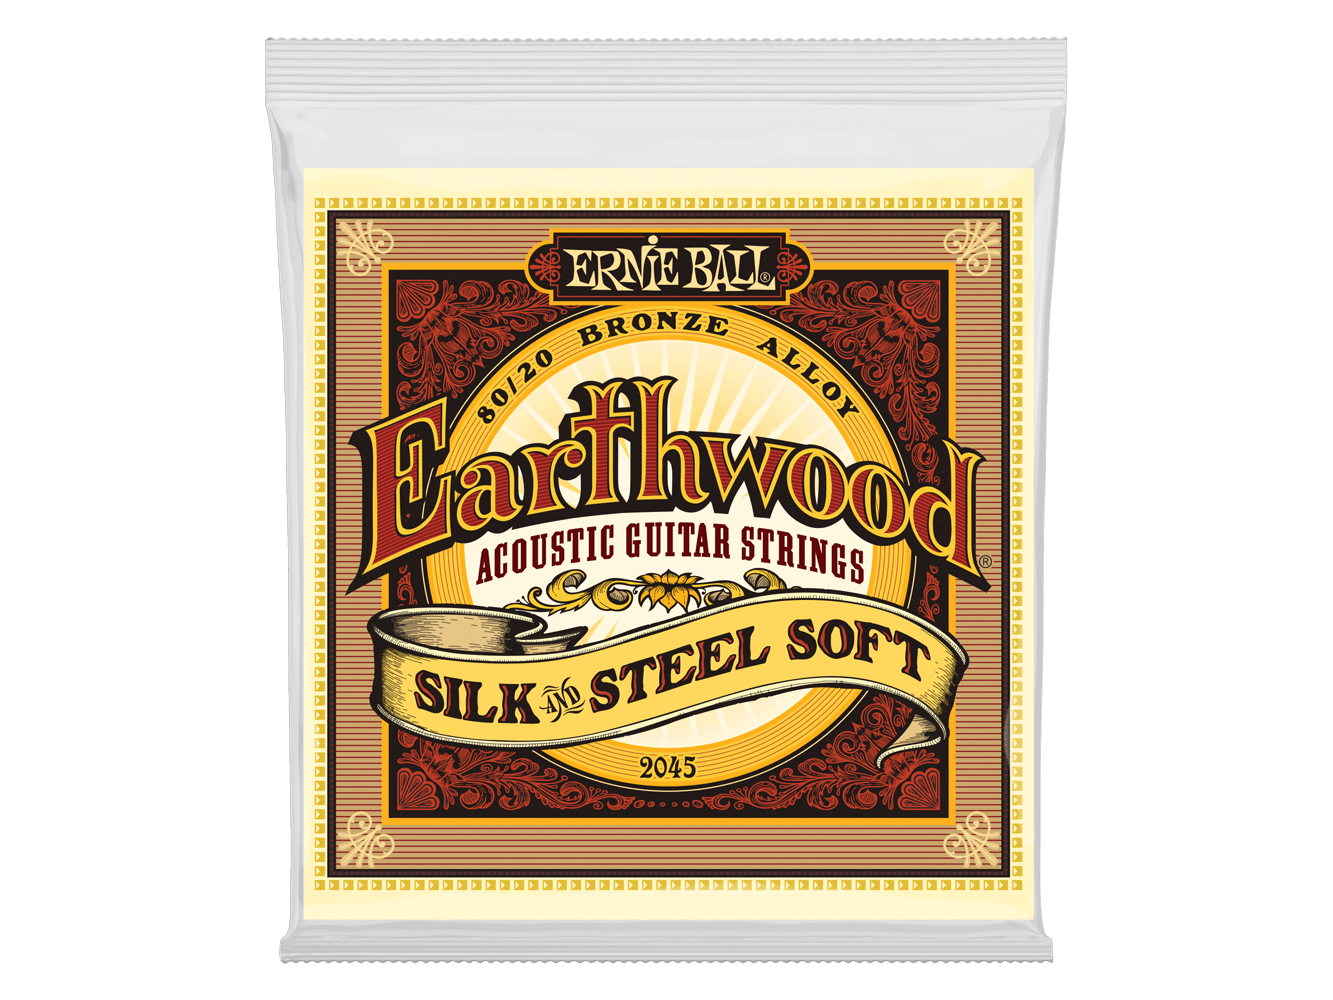 Ernie Ball Earthwood Silk & Steel Soft Bronze Acoustic Strings 11-52